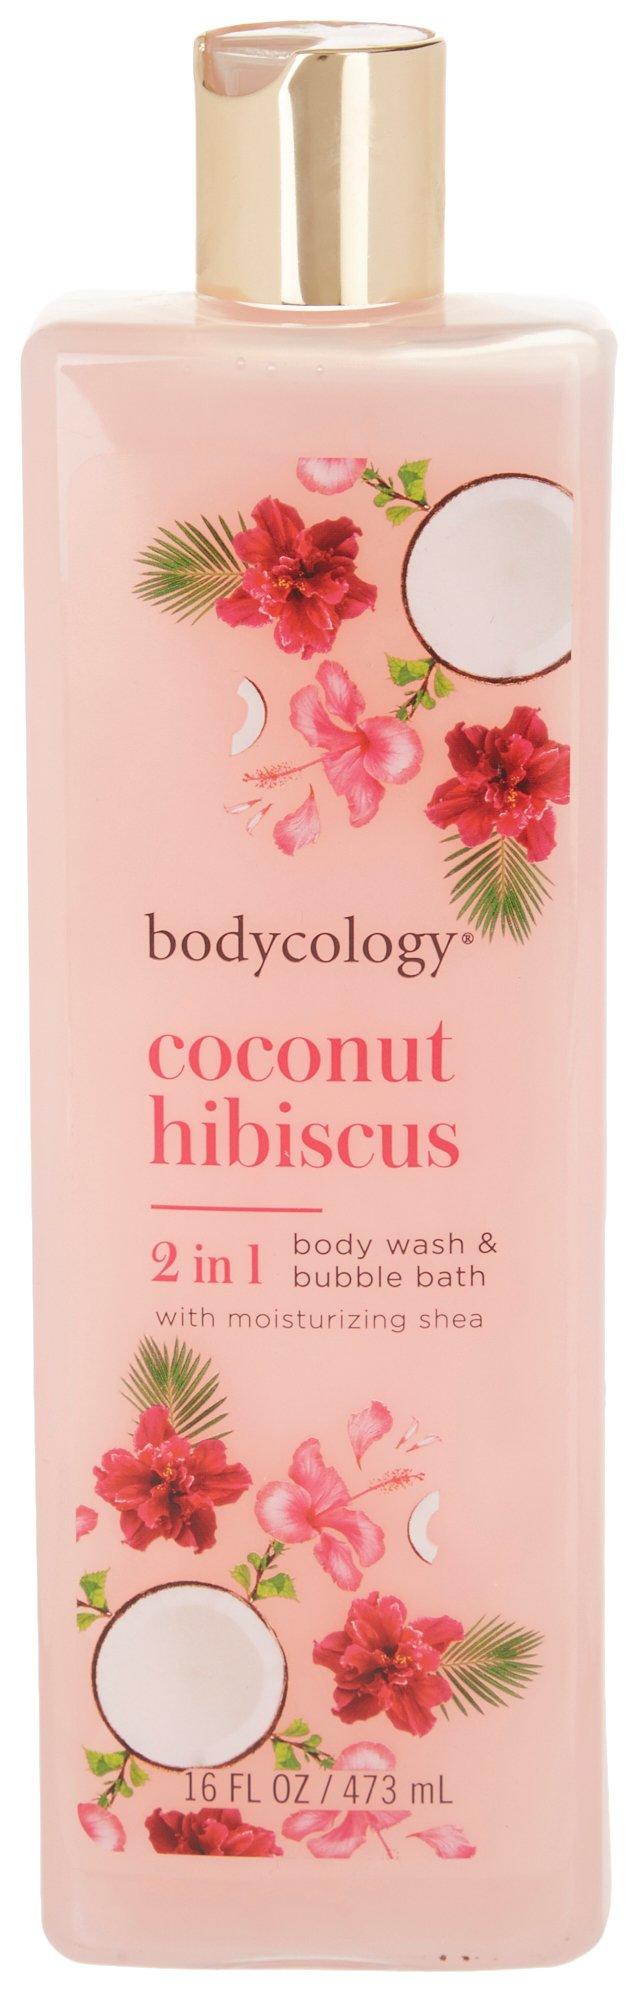 Bodycology Coconut Hibiscus Body Wash & Bubble Bath